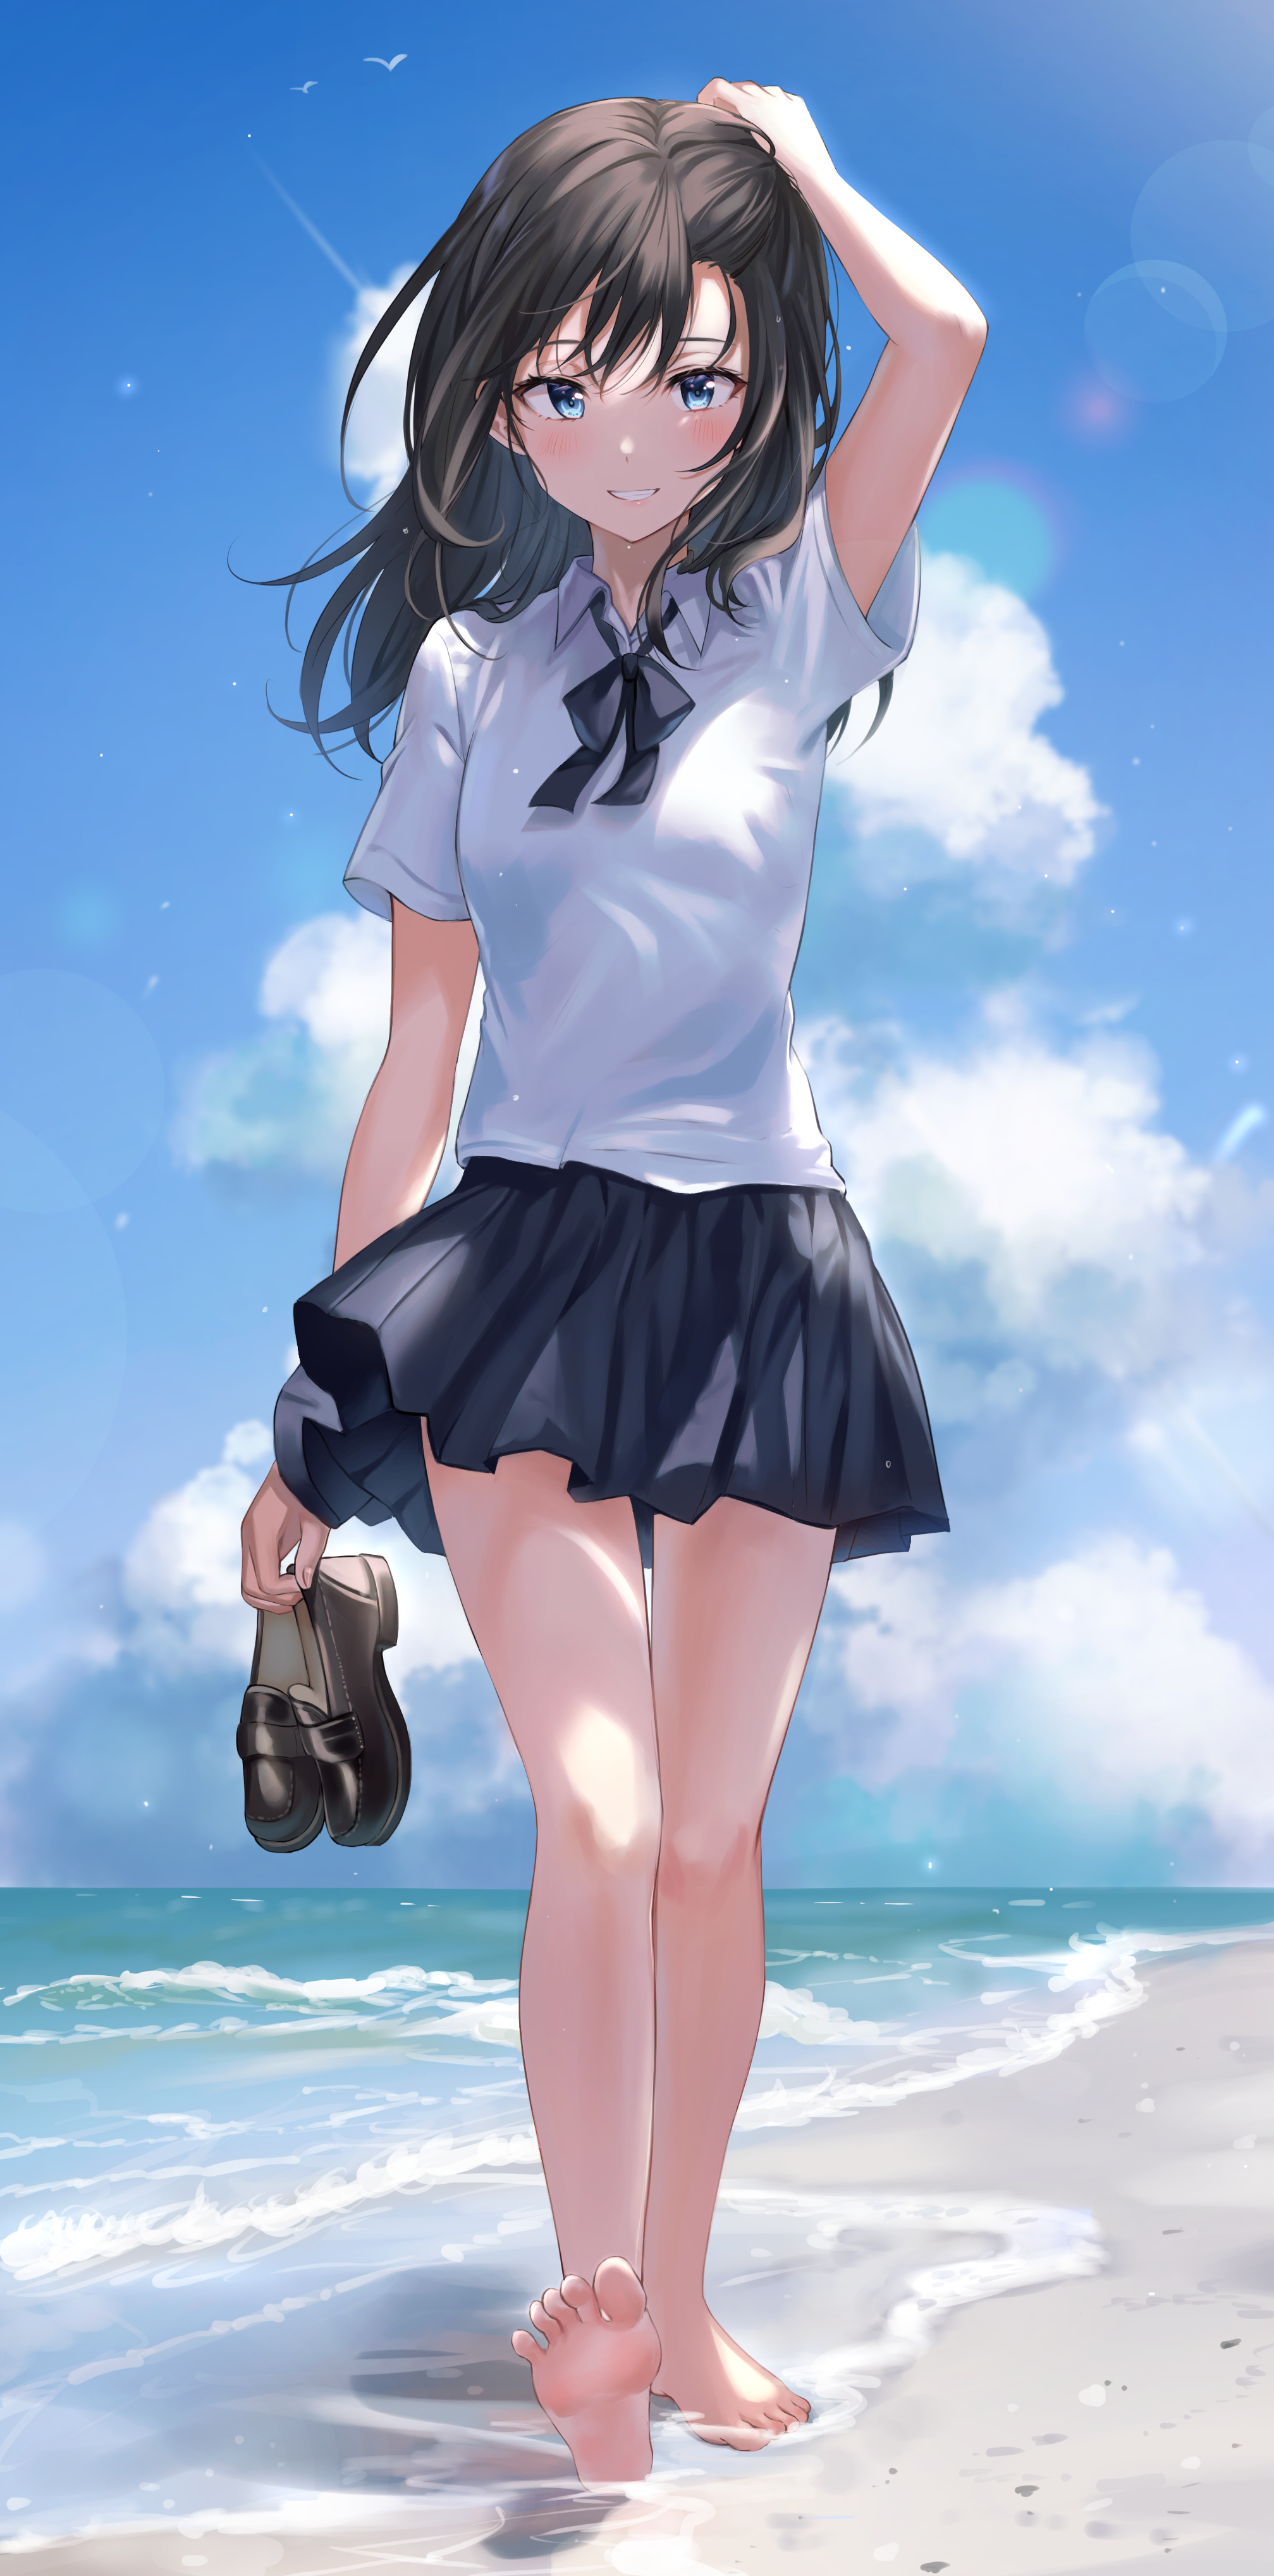 Anime 2015x4074 anime anime girls Tokkyu (artista) school uniform barefoot feet beach blushing smiling blue eyes dark hair portrait display artwork